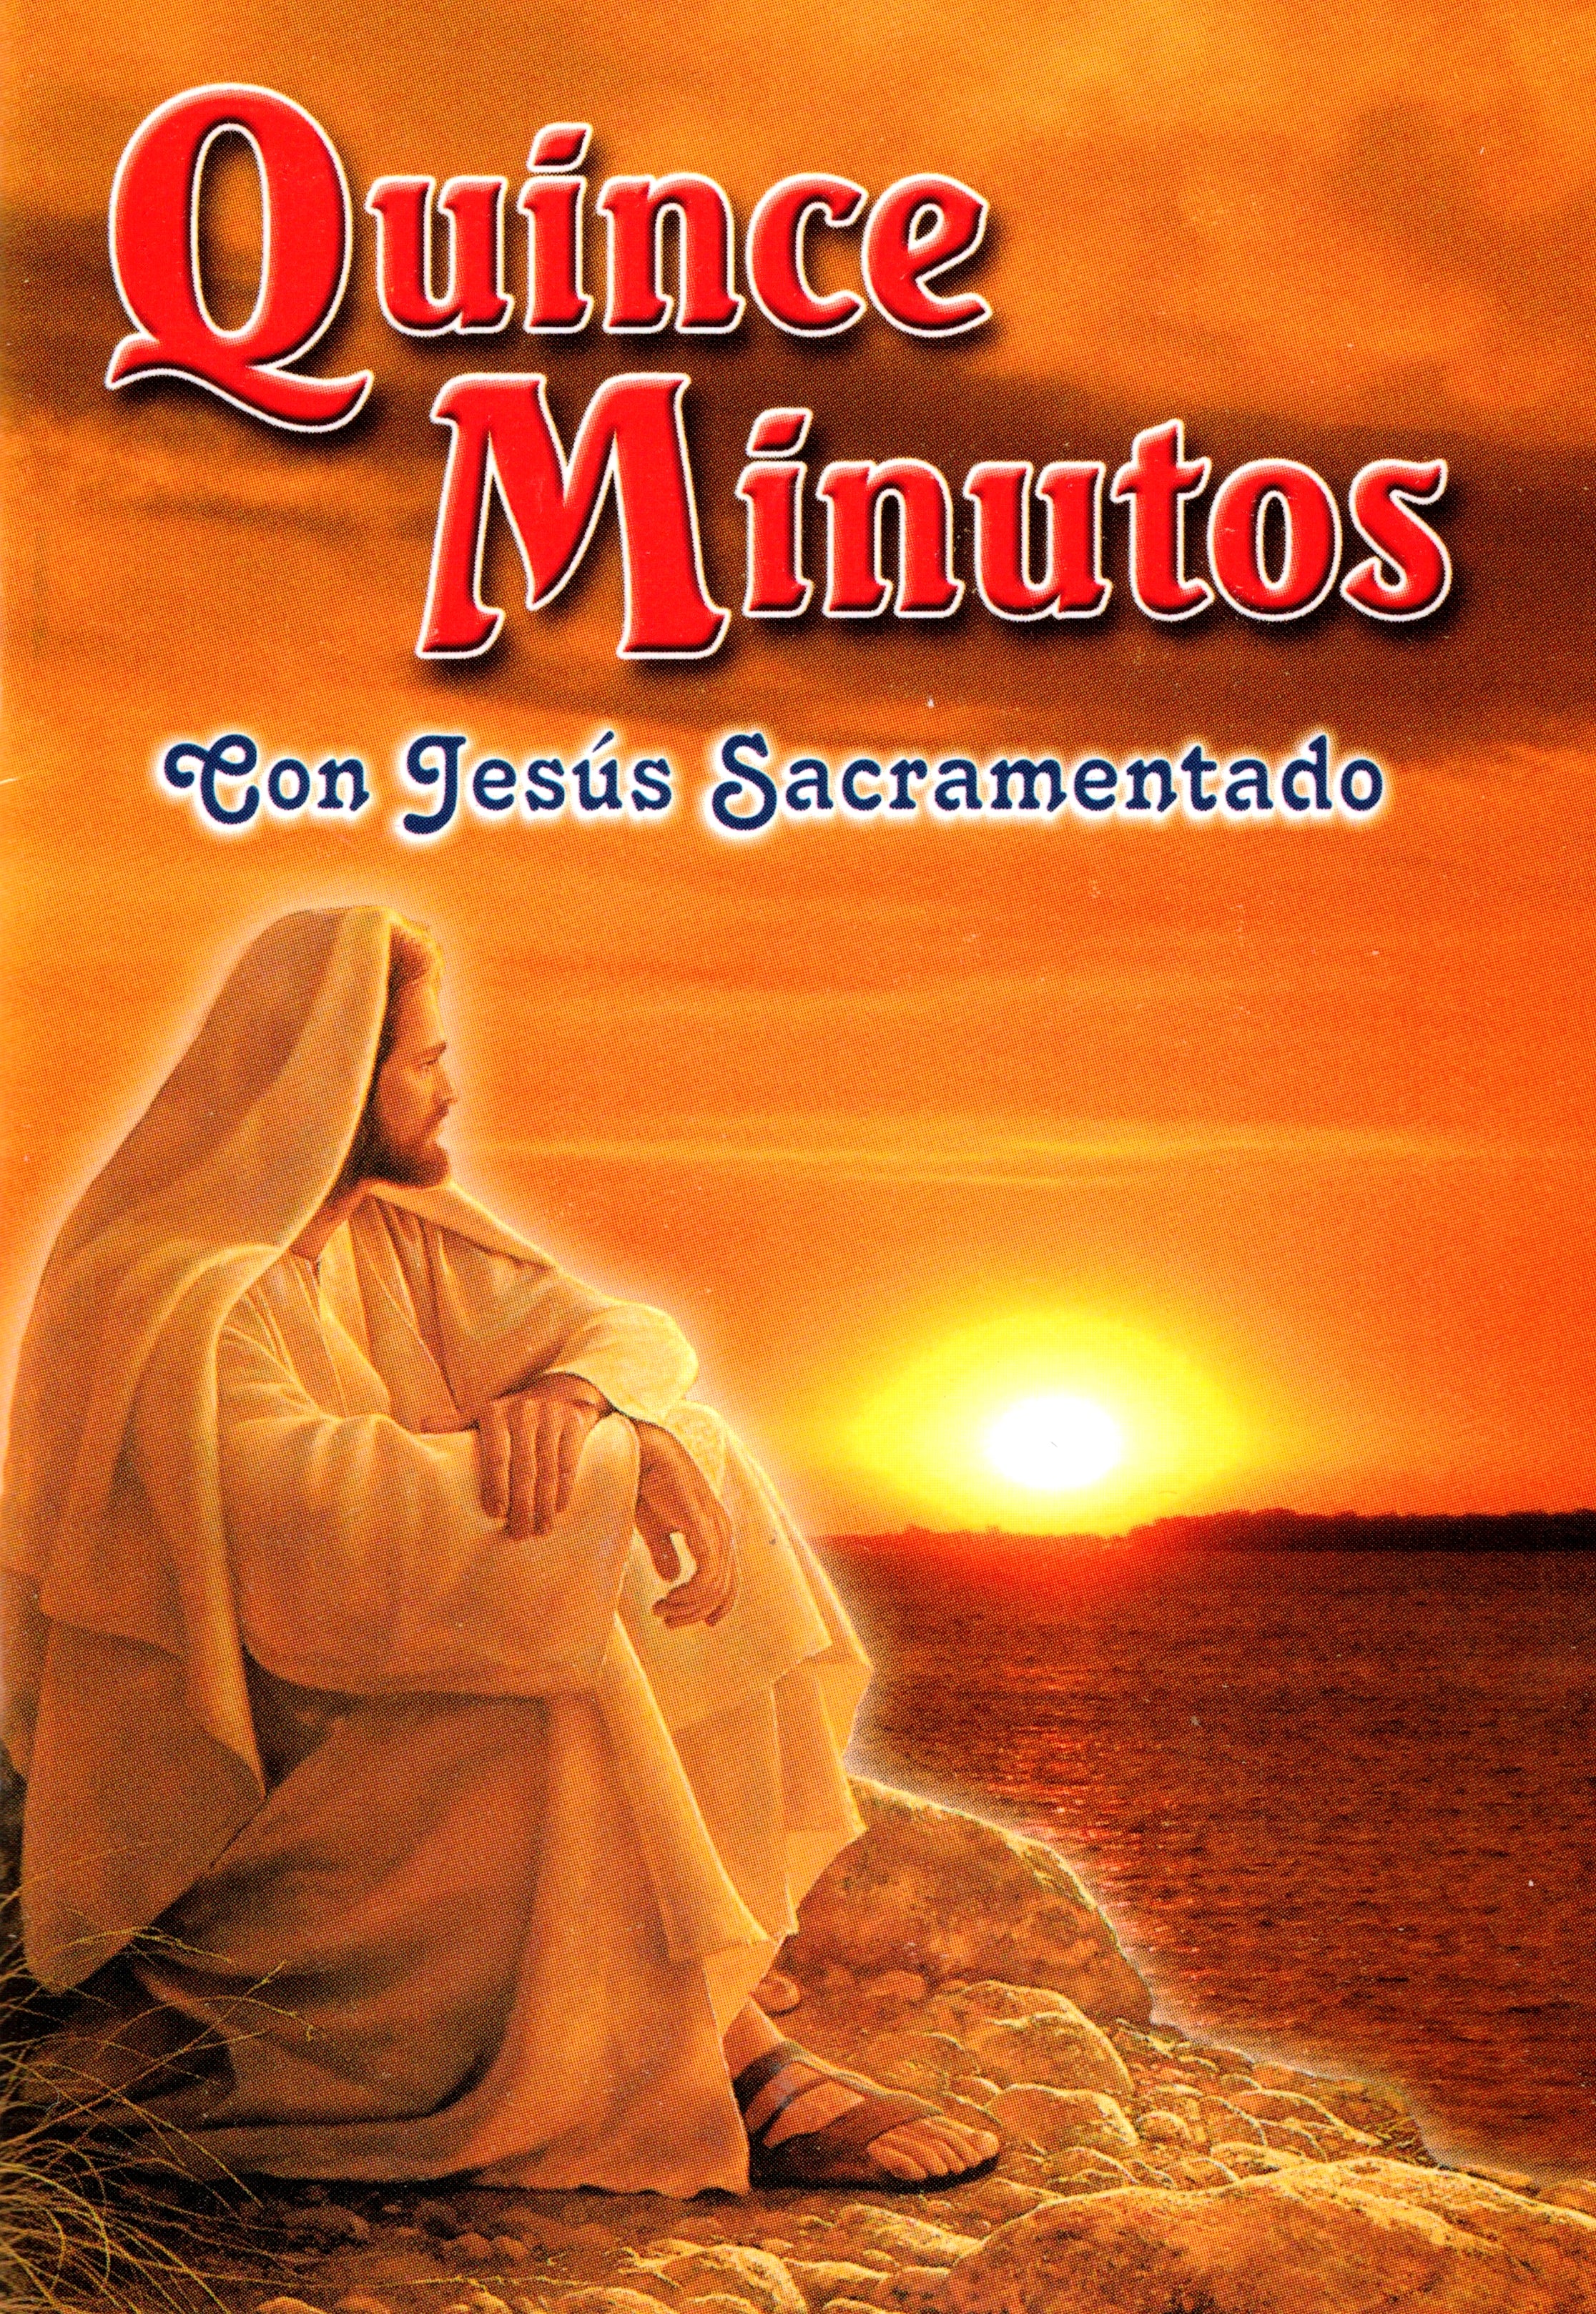 Quince Minutos en Compañía de Jesús Sacramentado